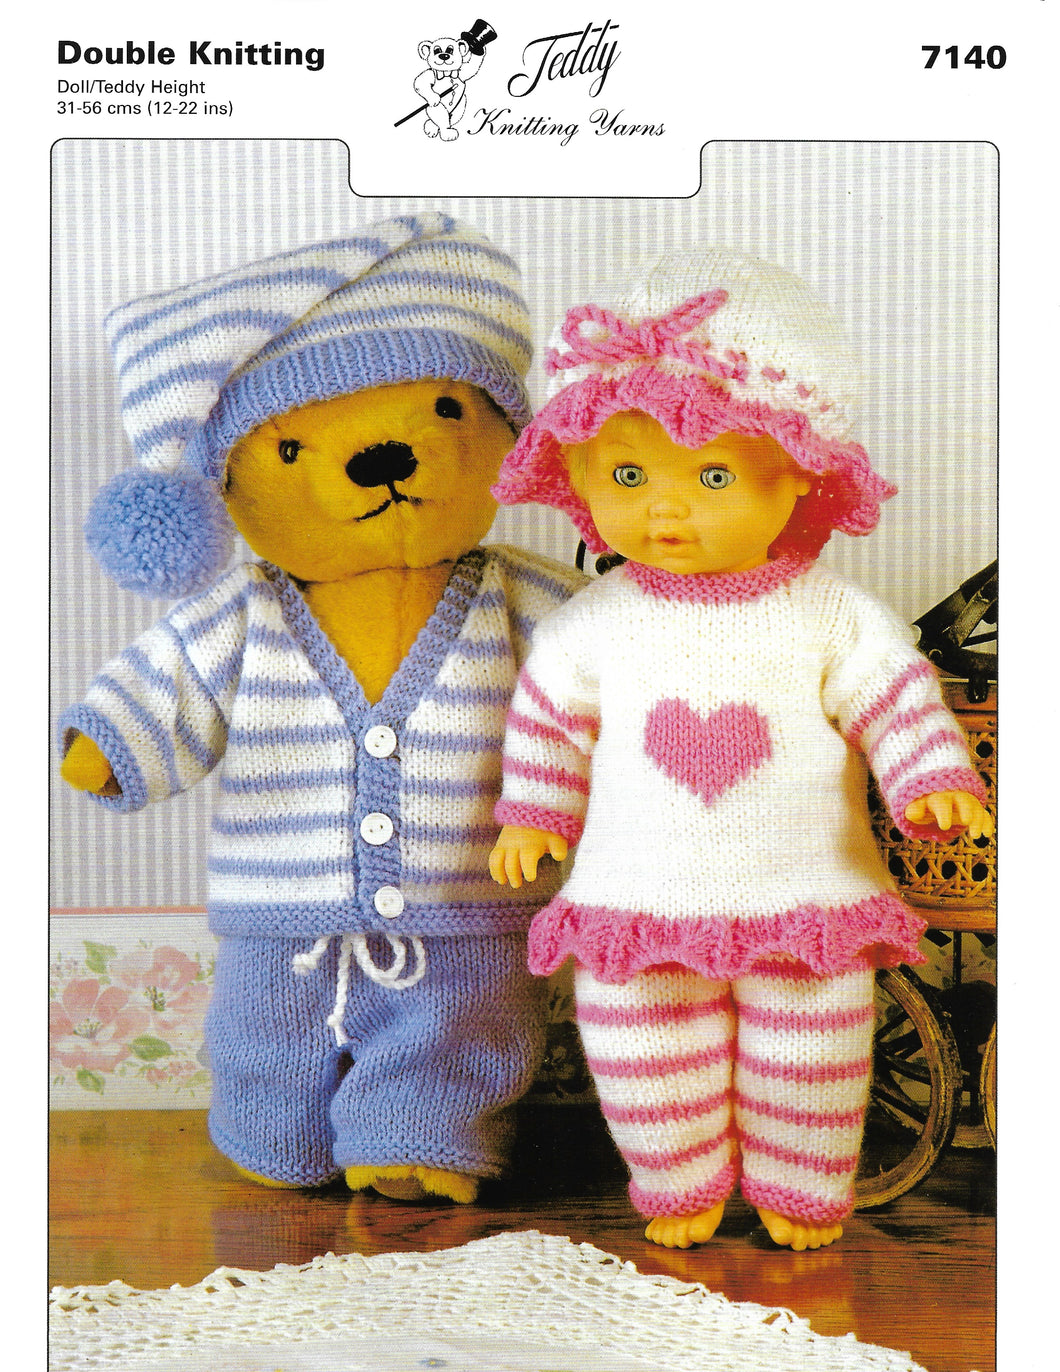 Knitting Pattern Leaflet Teddy 7140 DK Dolls Outfits